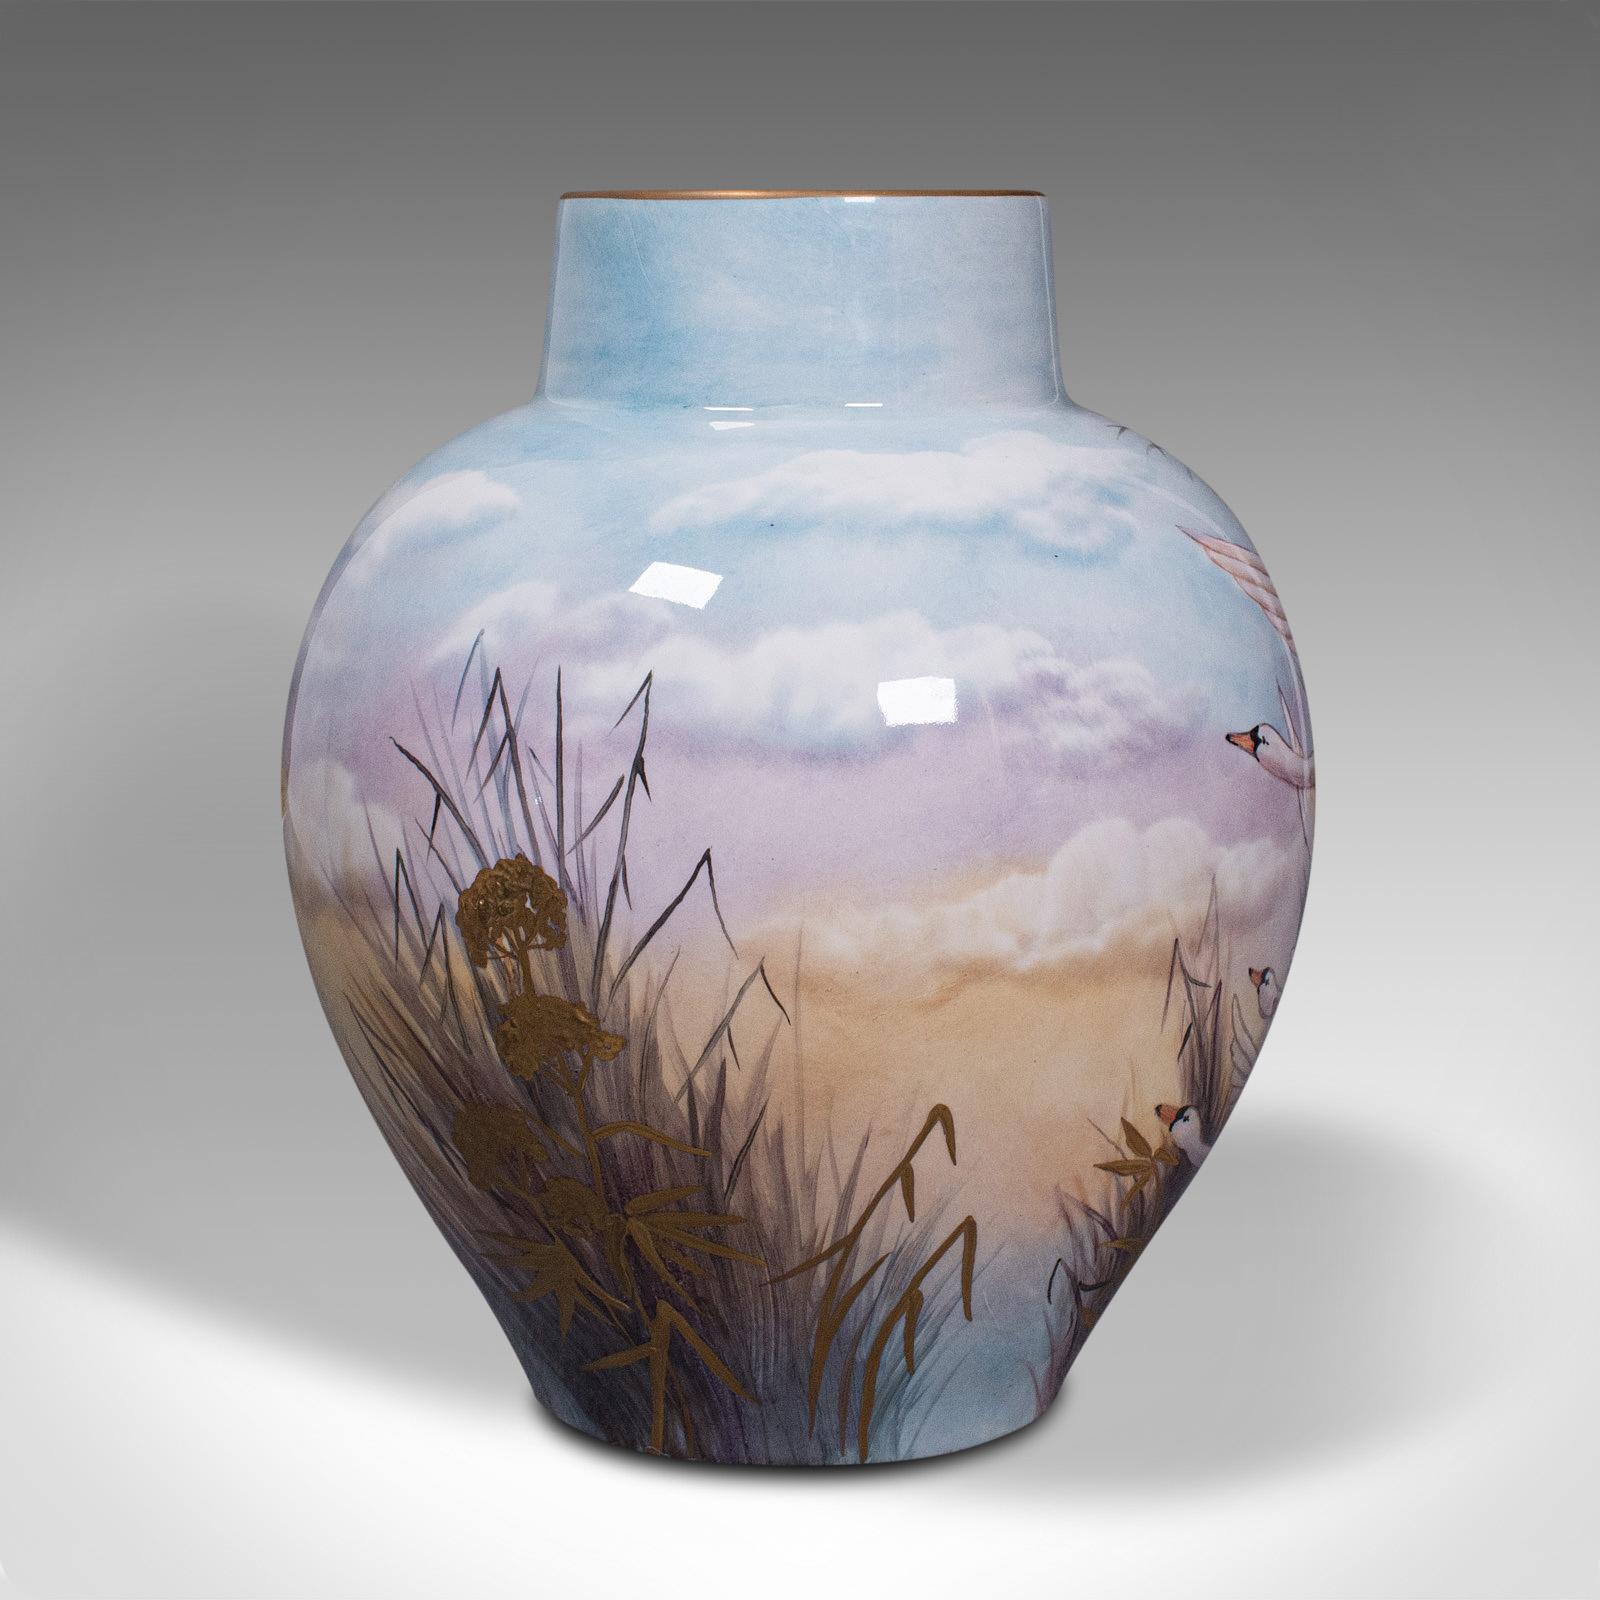 Vintage Decorative Flower Vase, English, Ceramic, Hand Painted, James Skerrett In Good Condition For Sale In Hele, Devon, GB